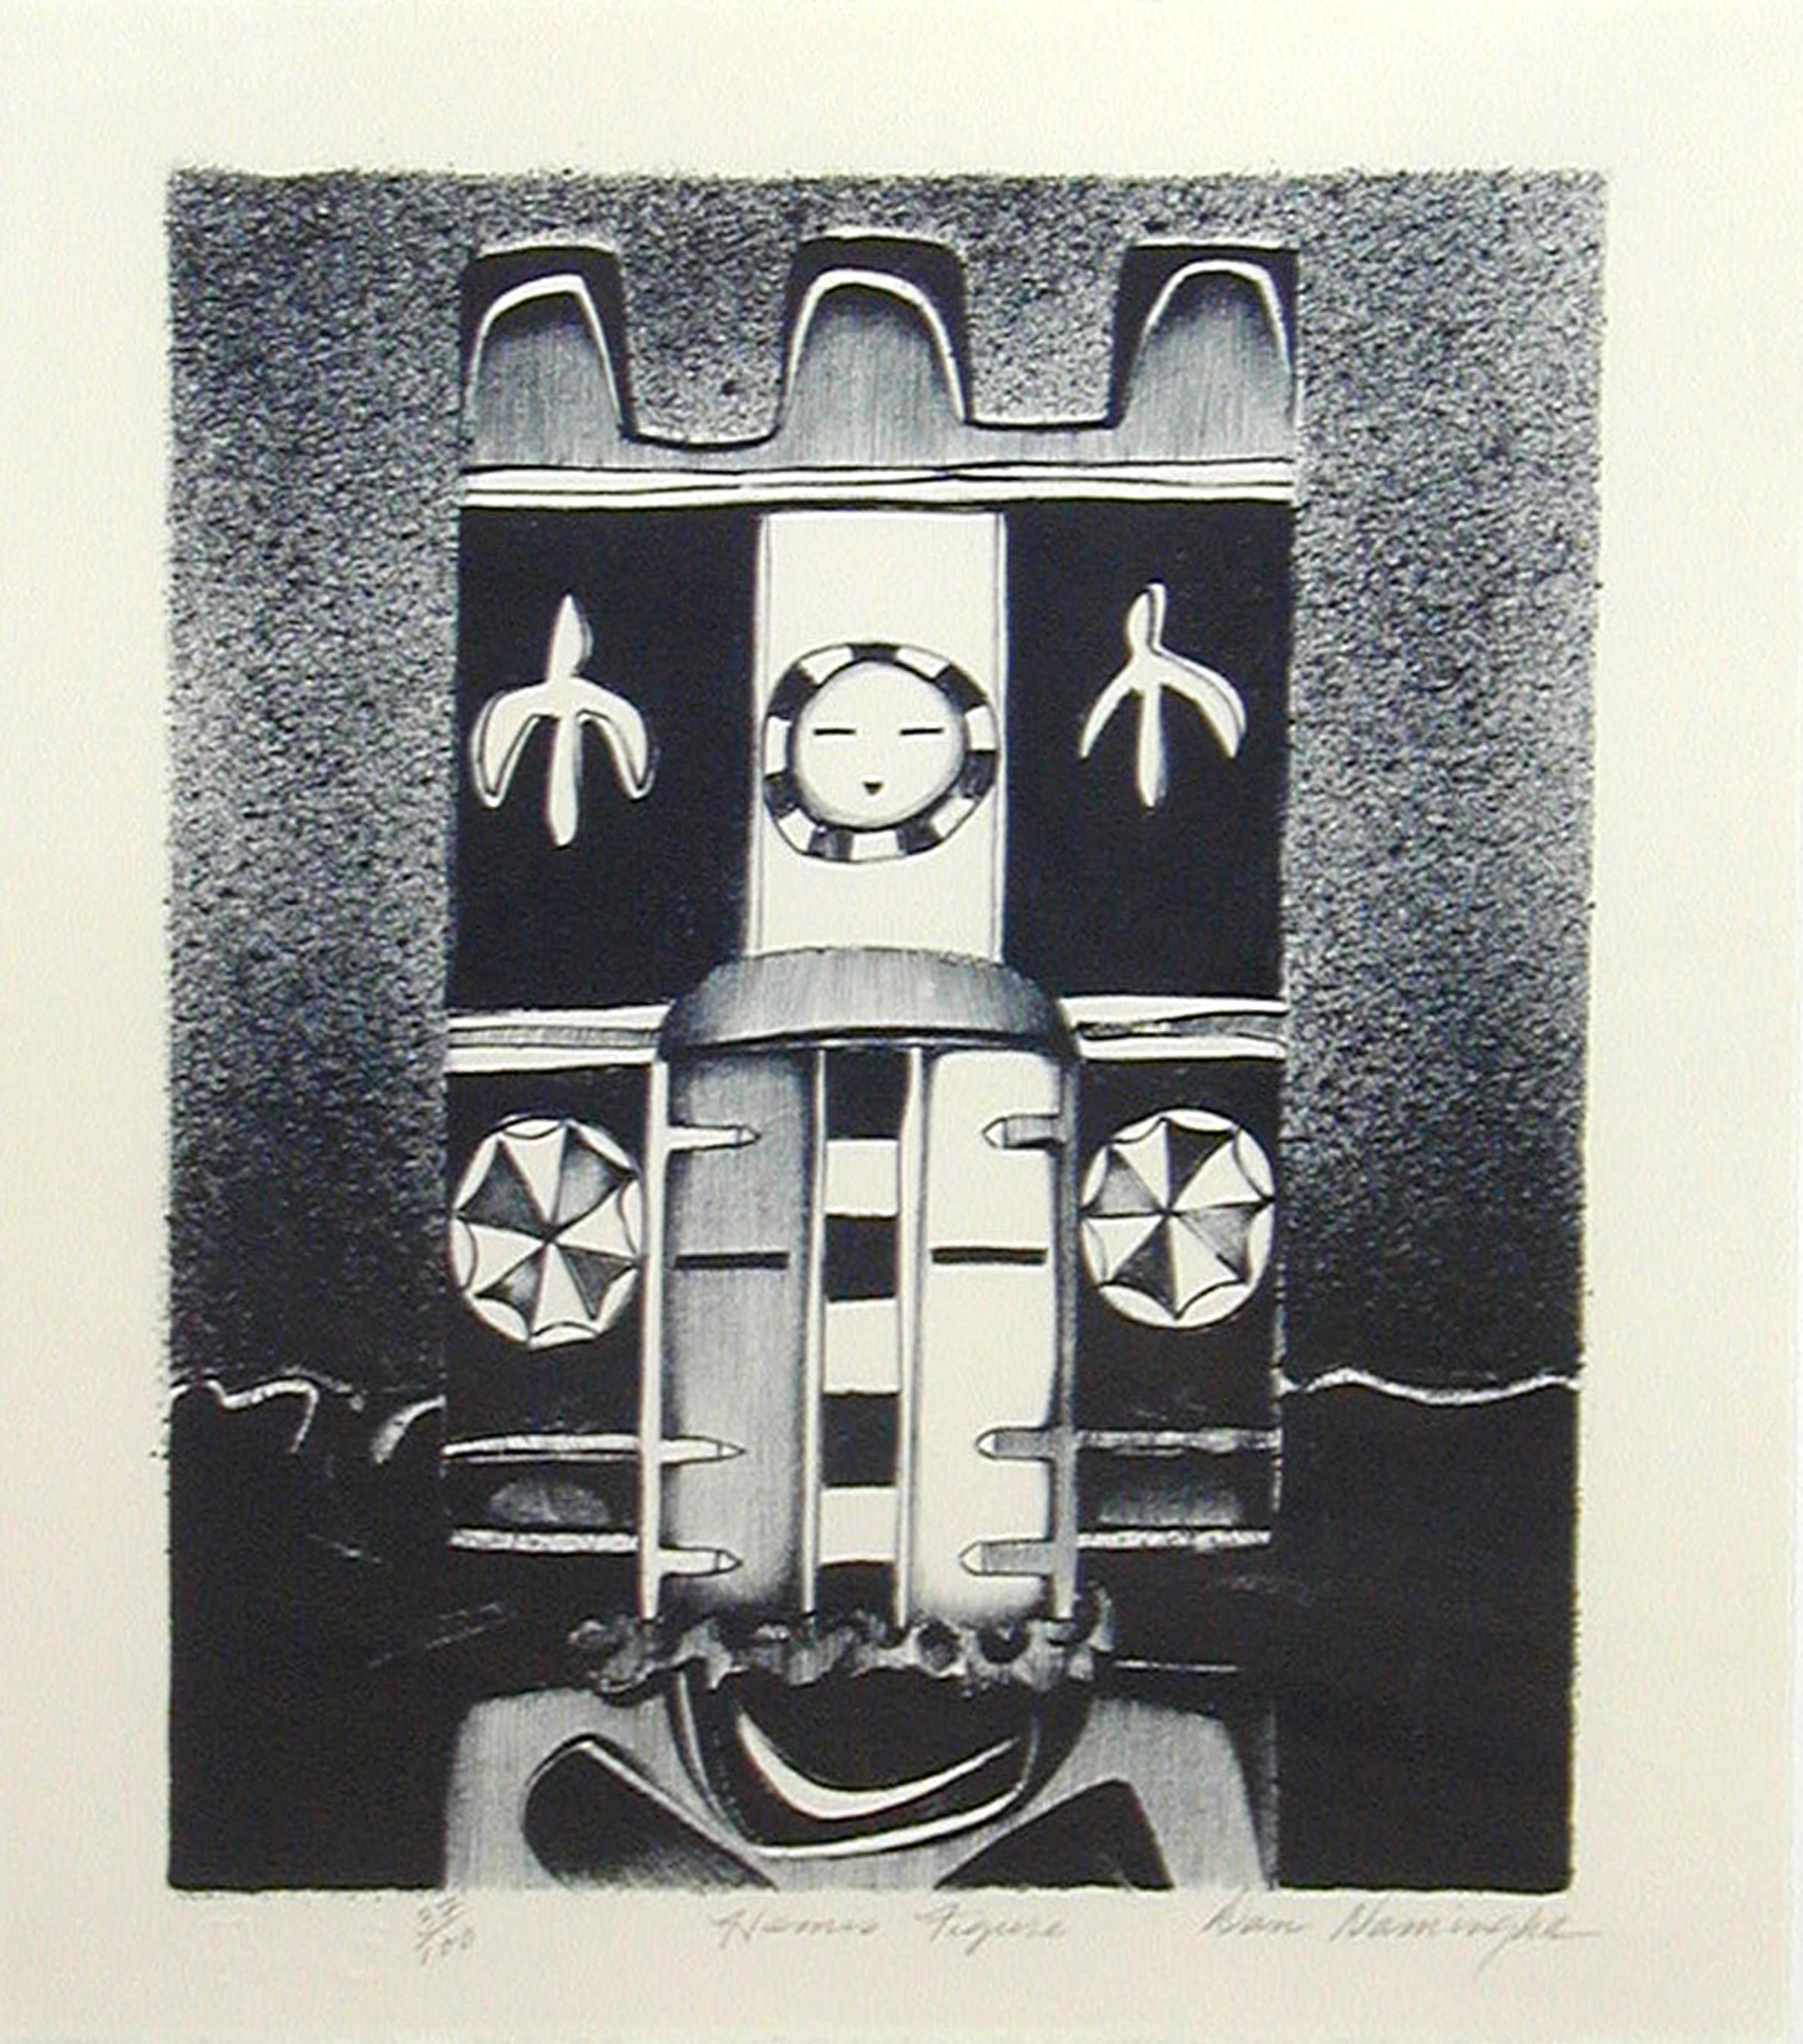 Hemis Figure by Dan Namingha Hopi kachina katsina black and white lithograph ed